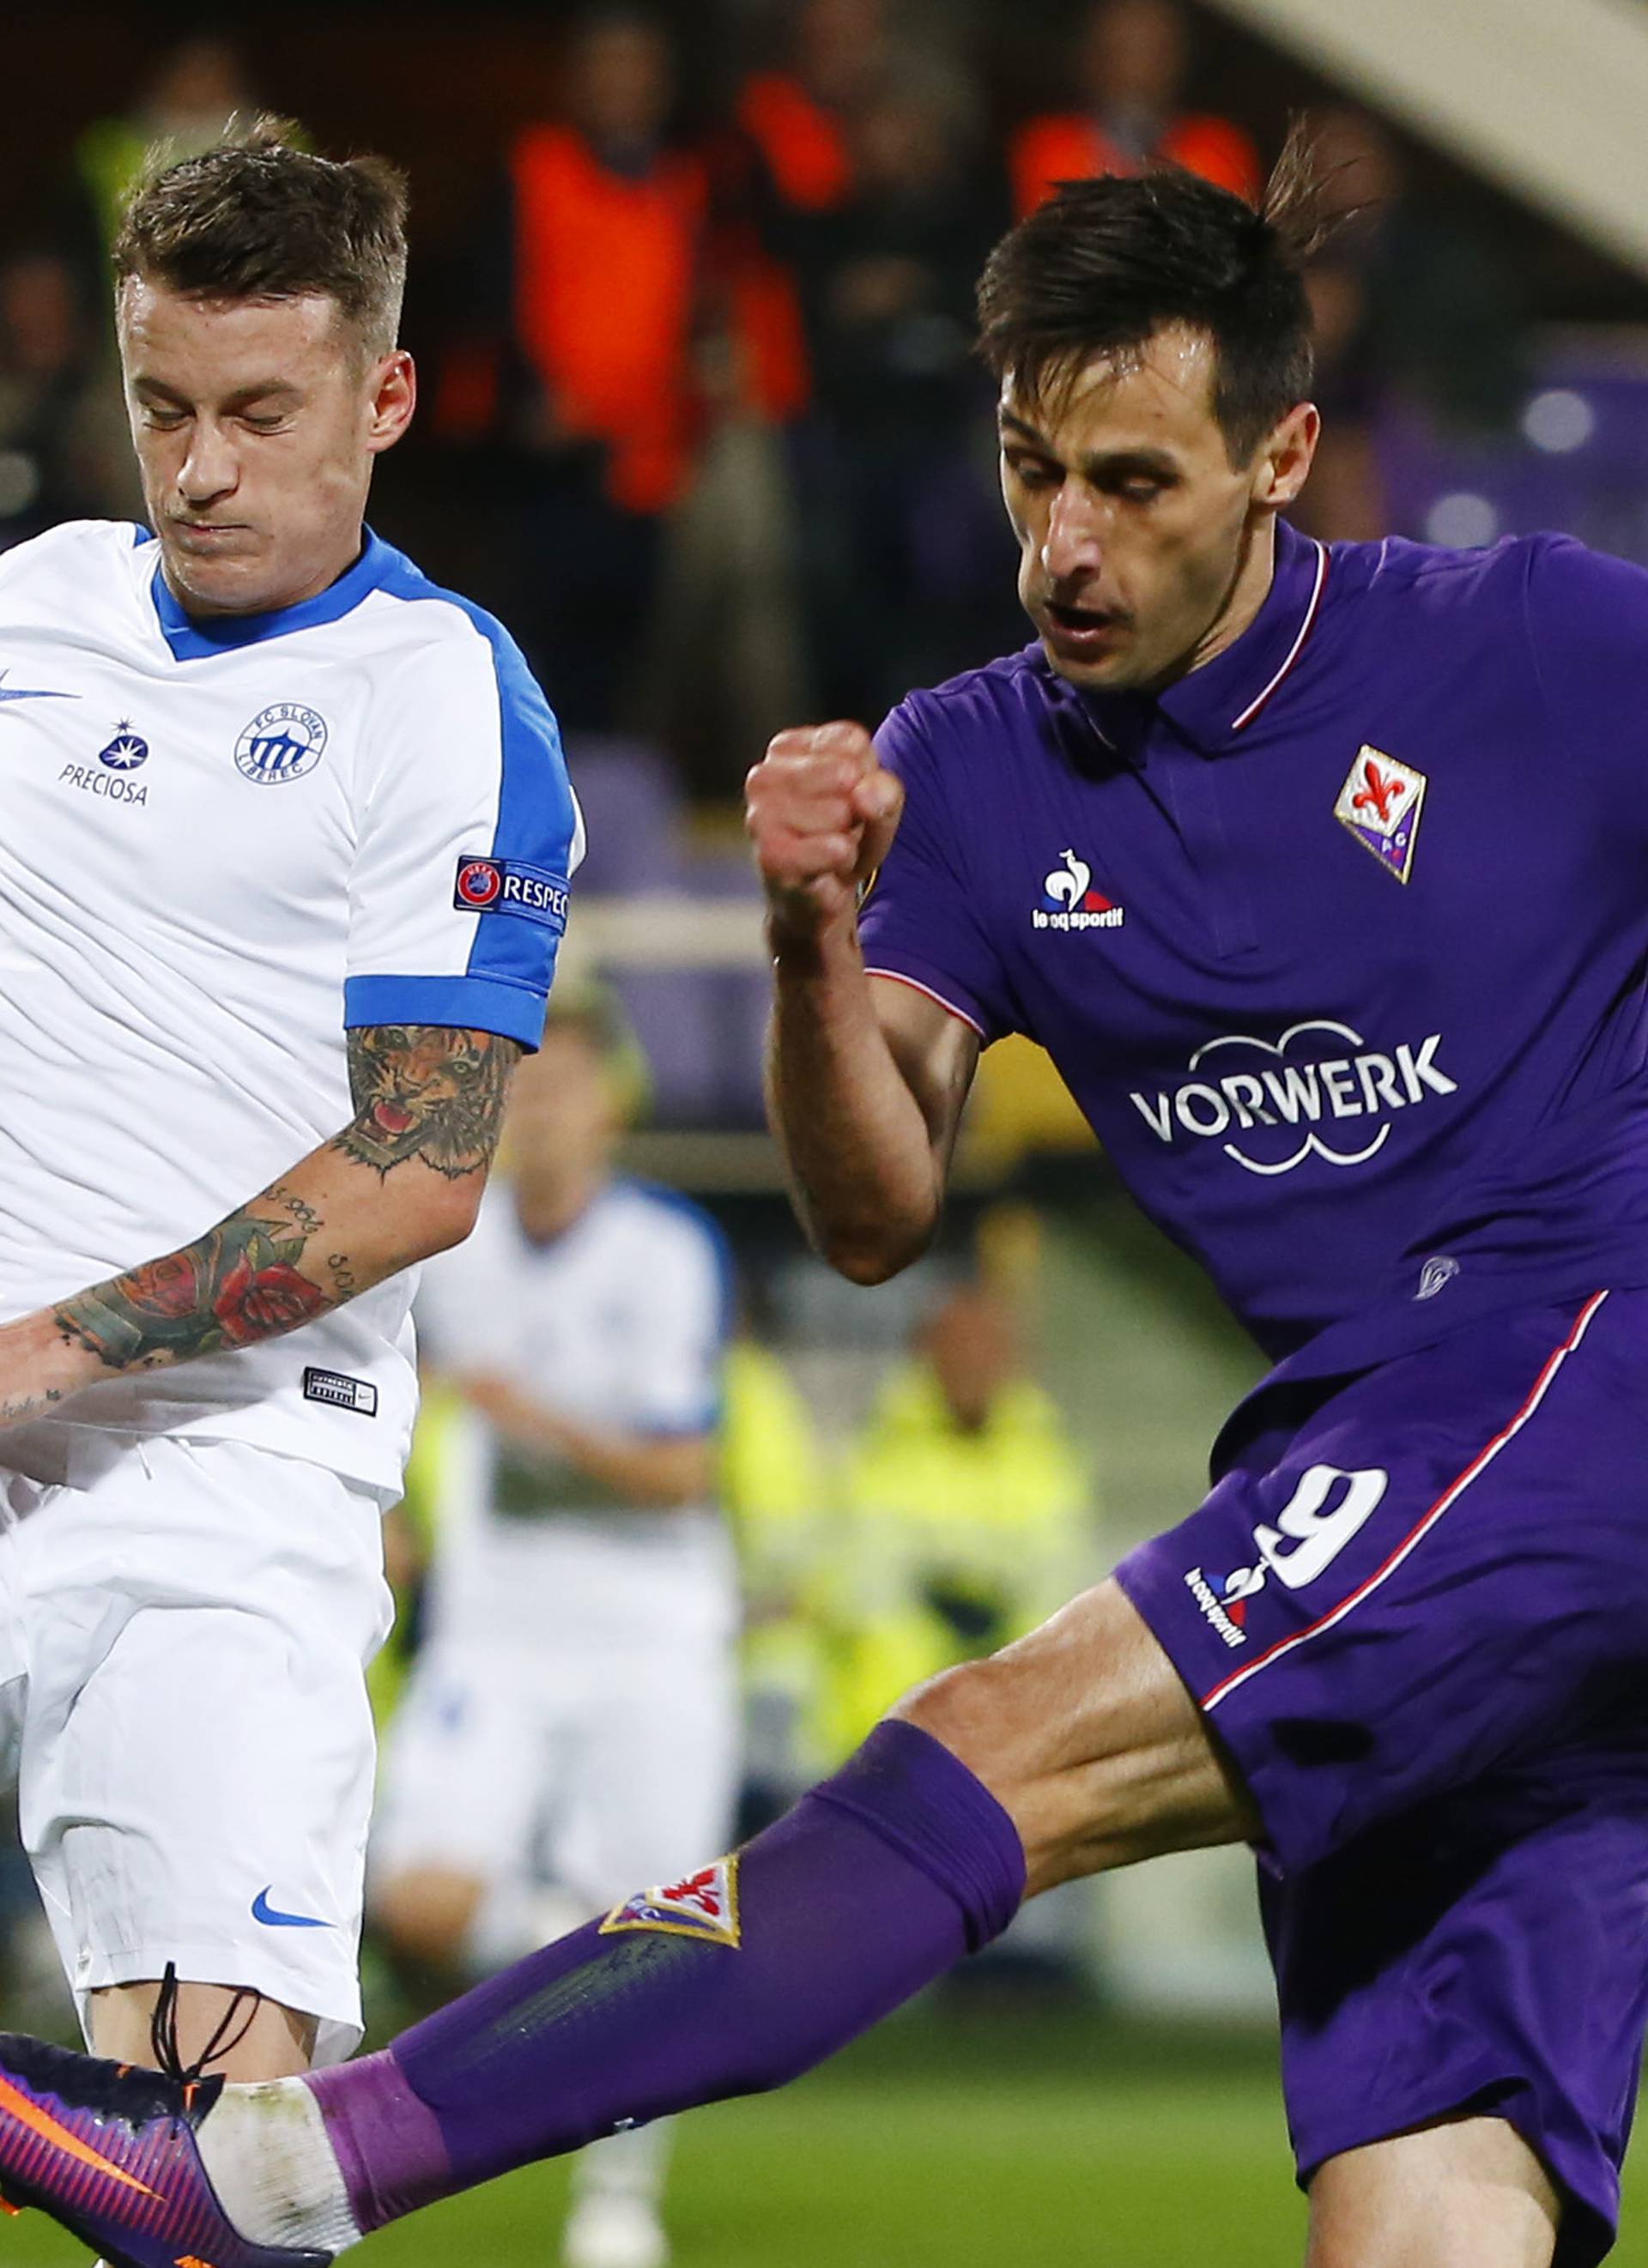 Fiorentina's Nikola Kalinic in action with Slovan Liberec's Jan Sykora